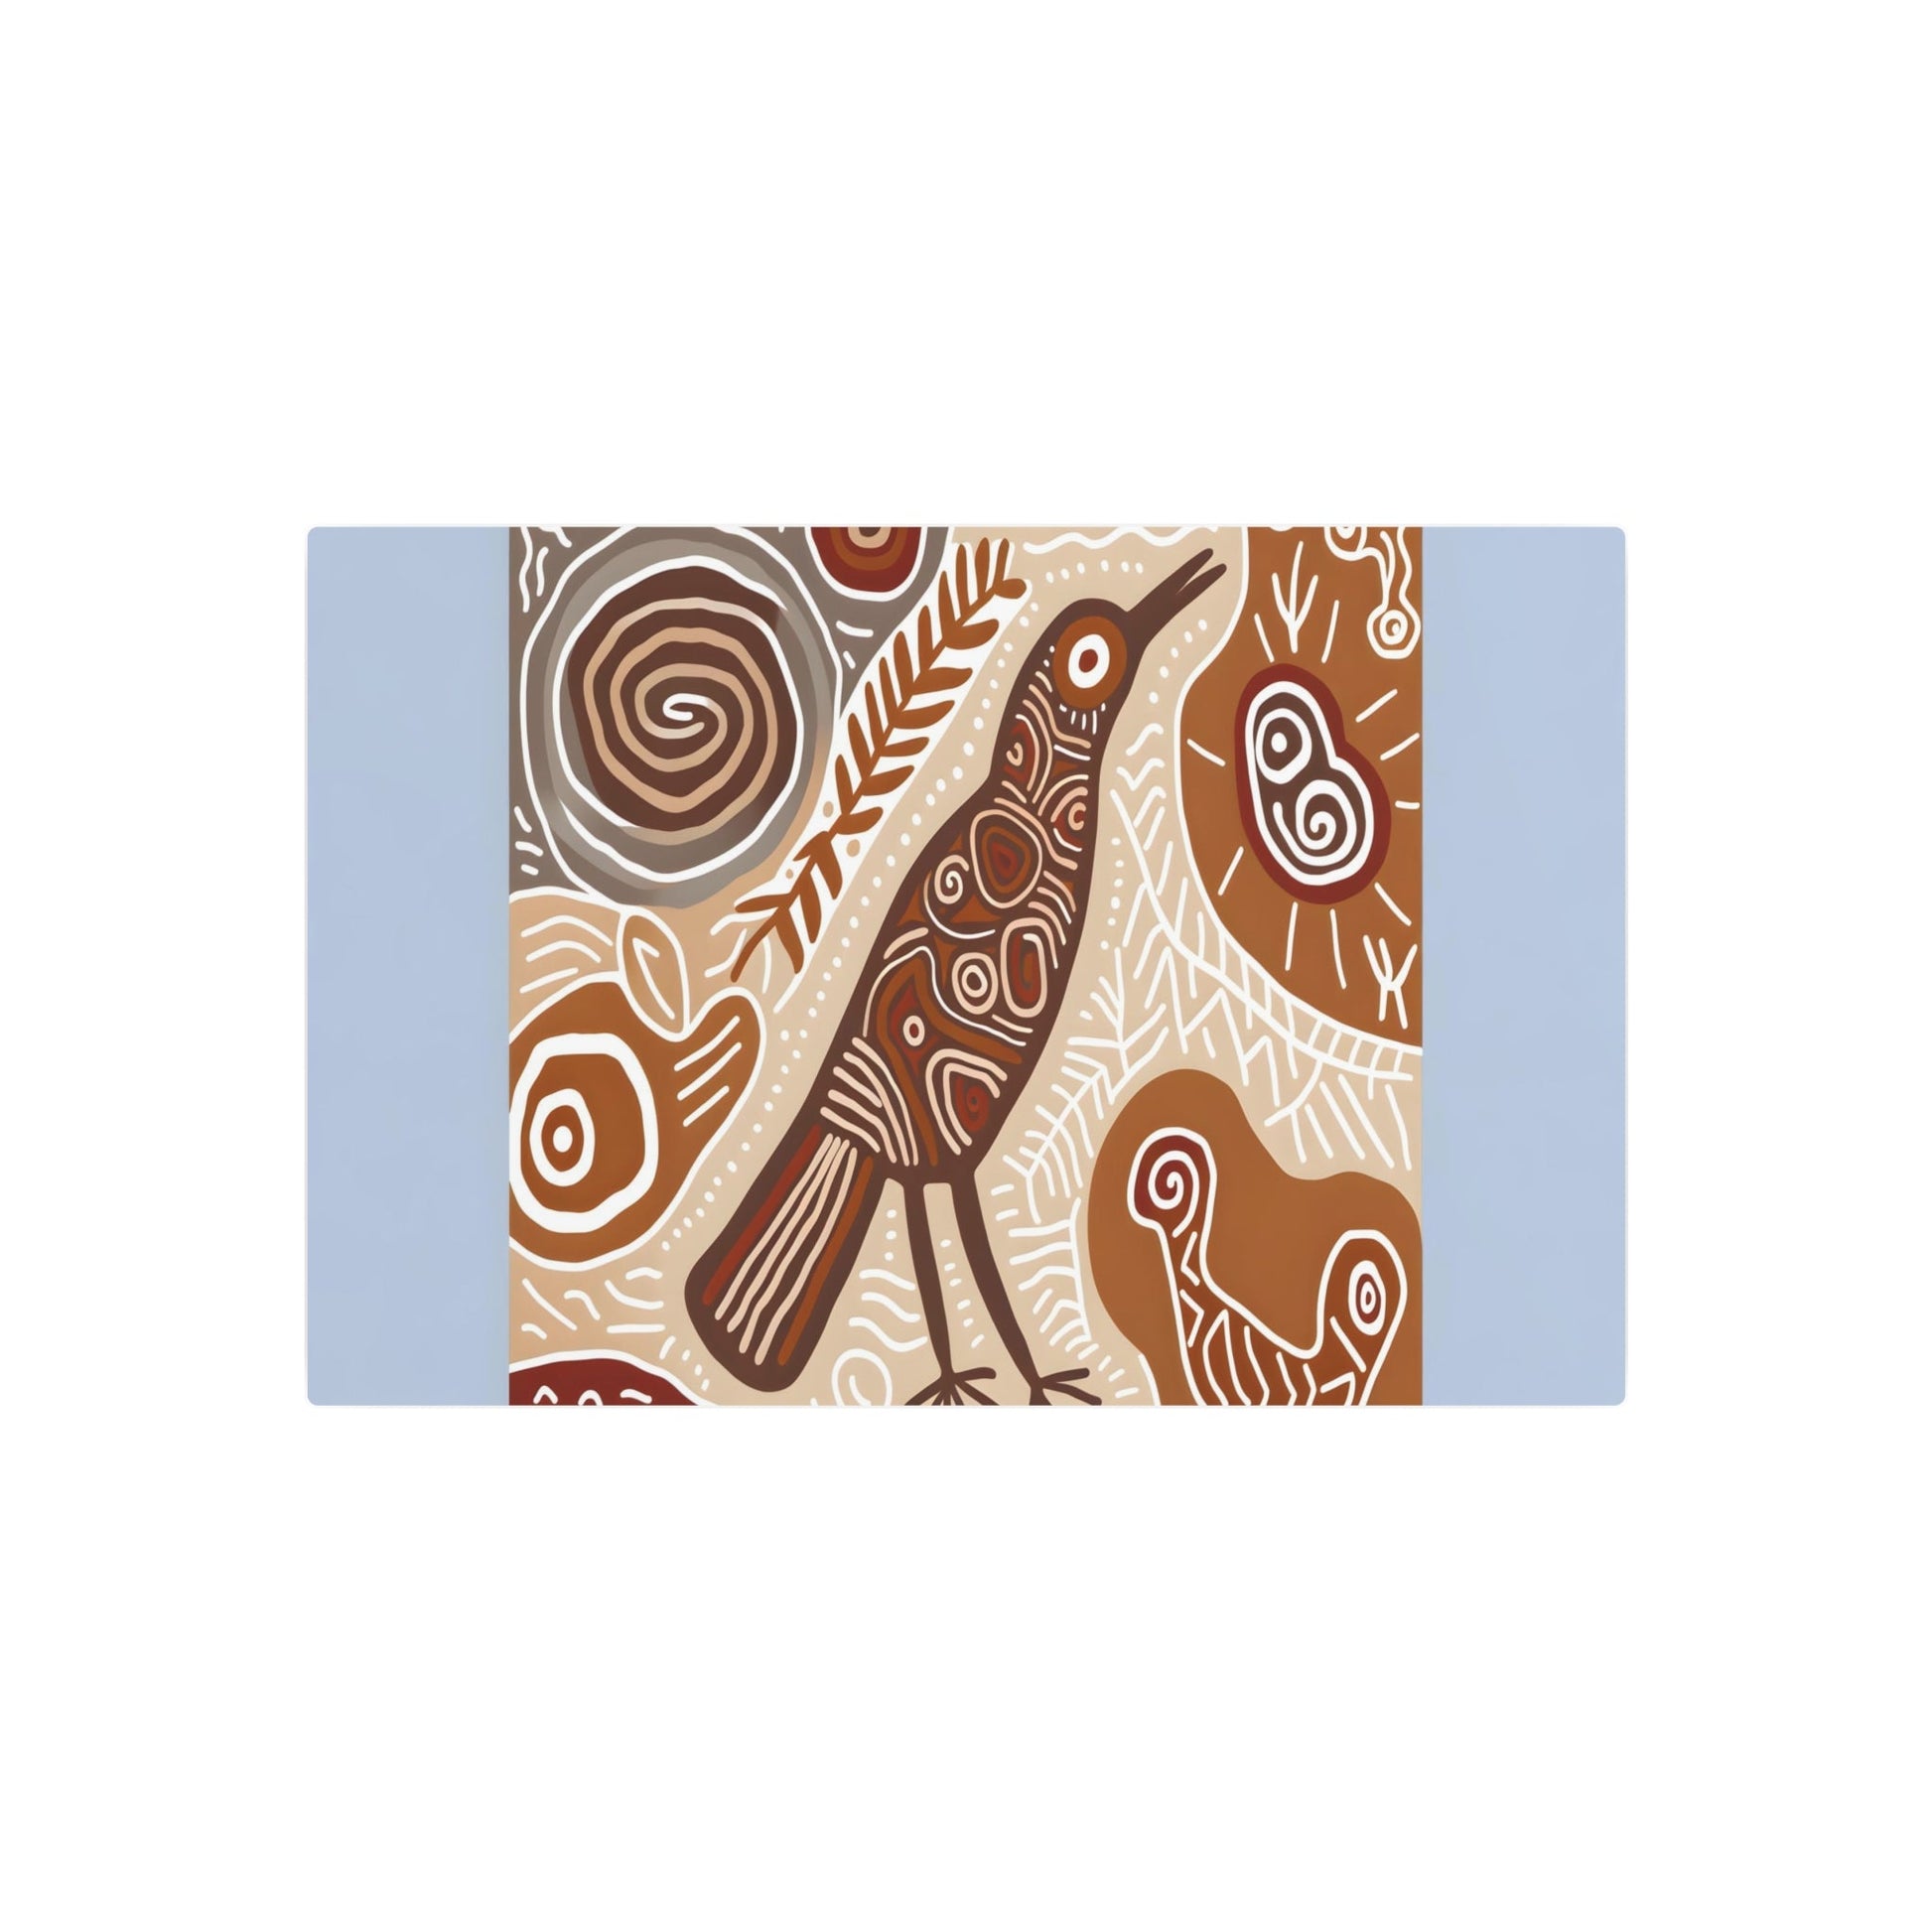 Metal Poster Art | "Aboriginal Art Inspired Australian Bird - Authentic Non-Western Global Art in Unique Aboriginal Style" - Metal Poster Art 30″ x 20″ (Horizontal) 0.12''